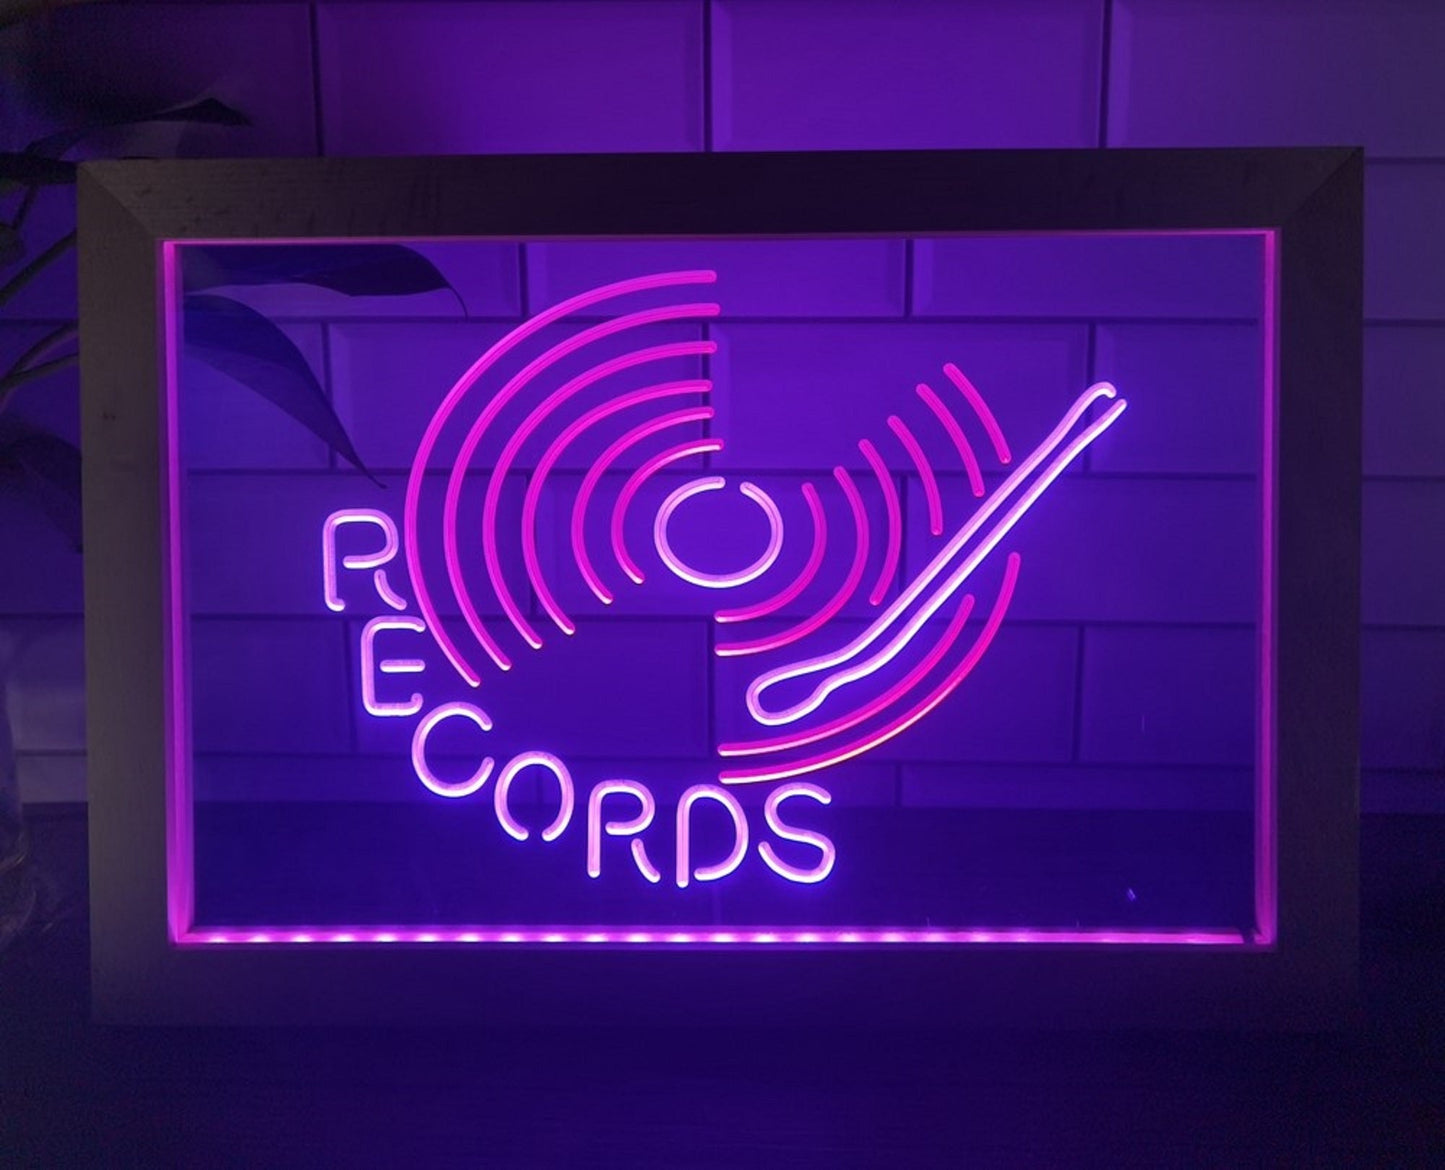 Neon Sign Framed Dual Color Records Turntable DJ Home Studio Wall Desktop Decor